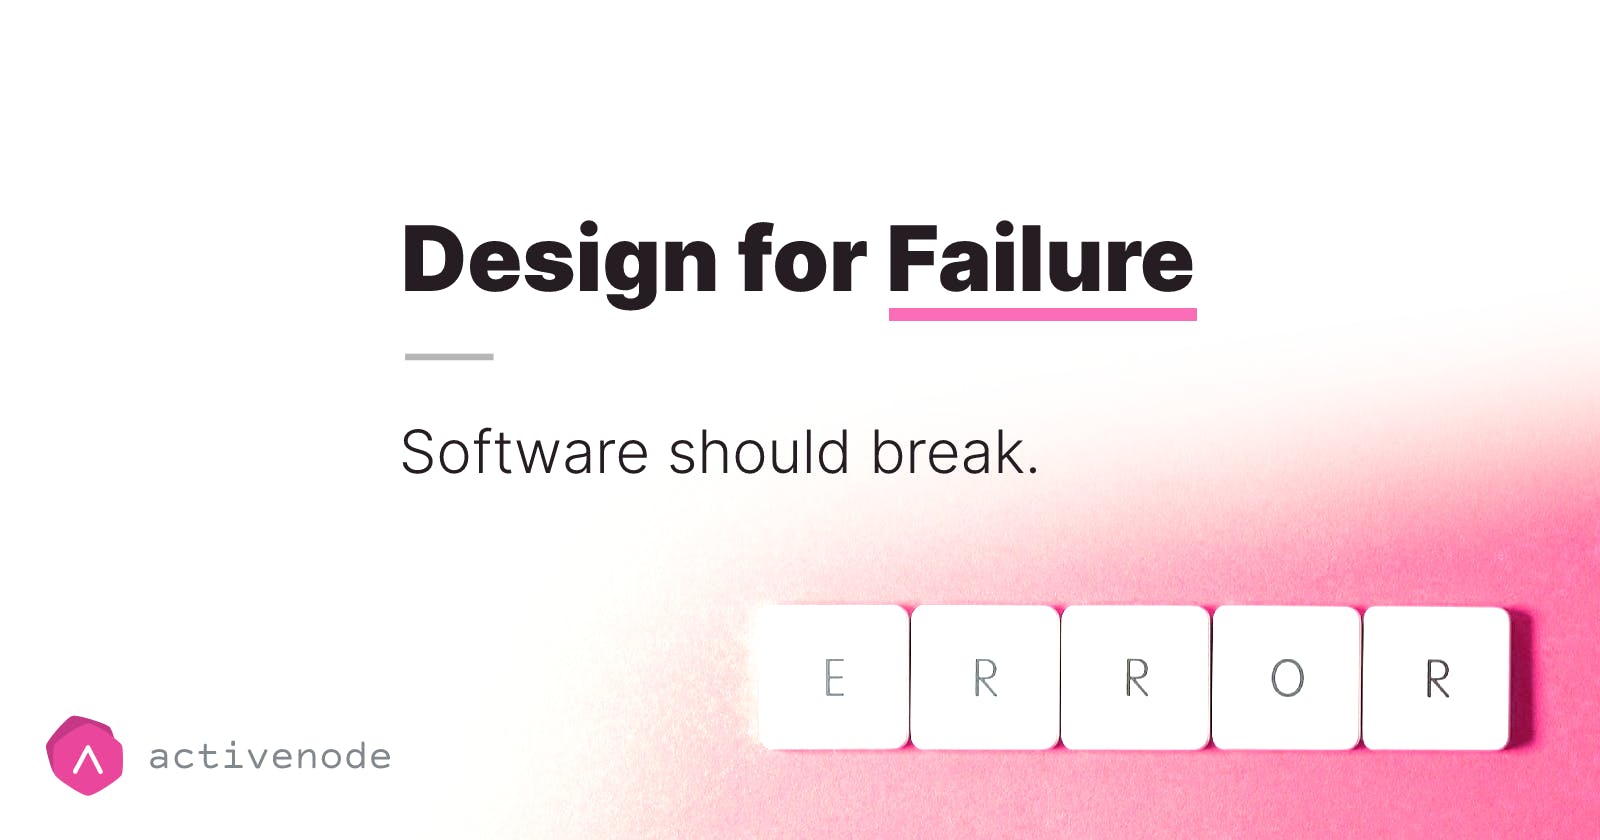 Design for Failure: Your software should break